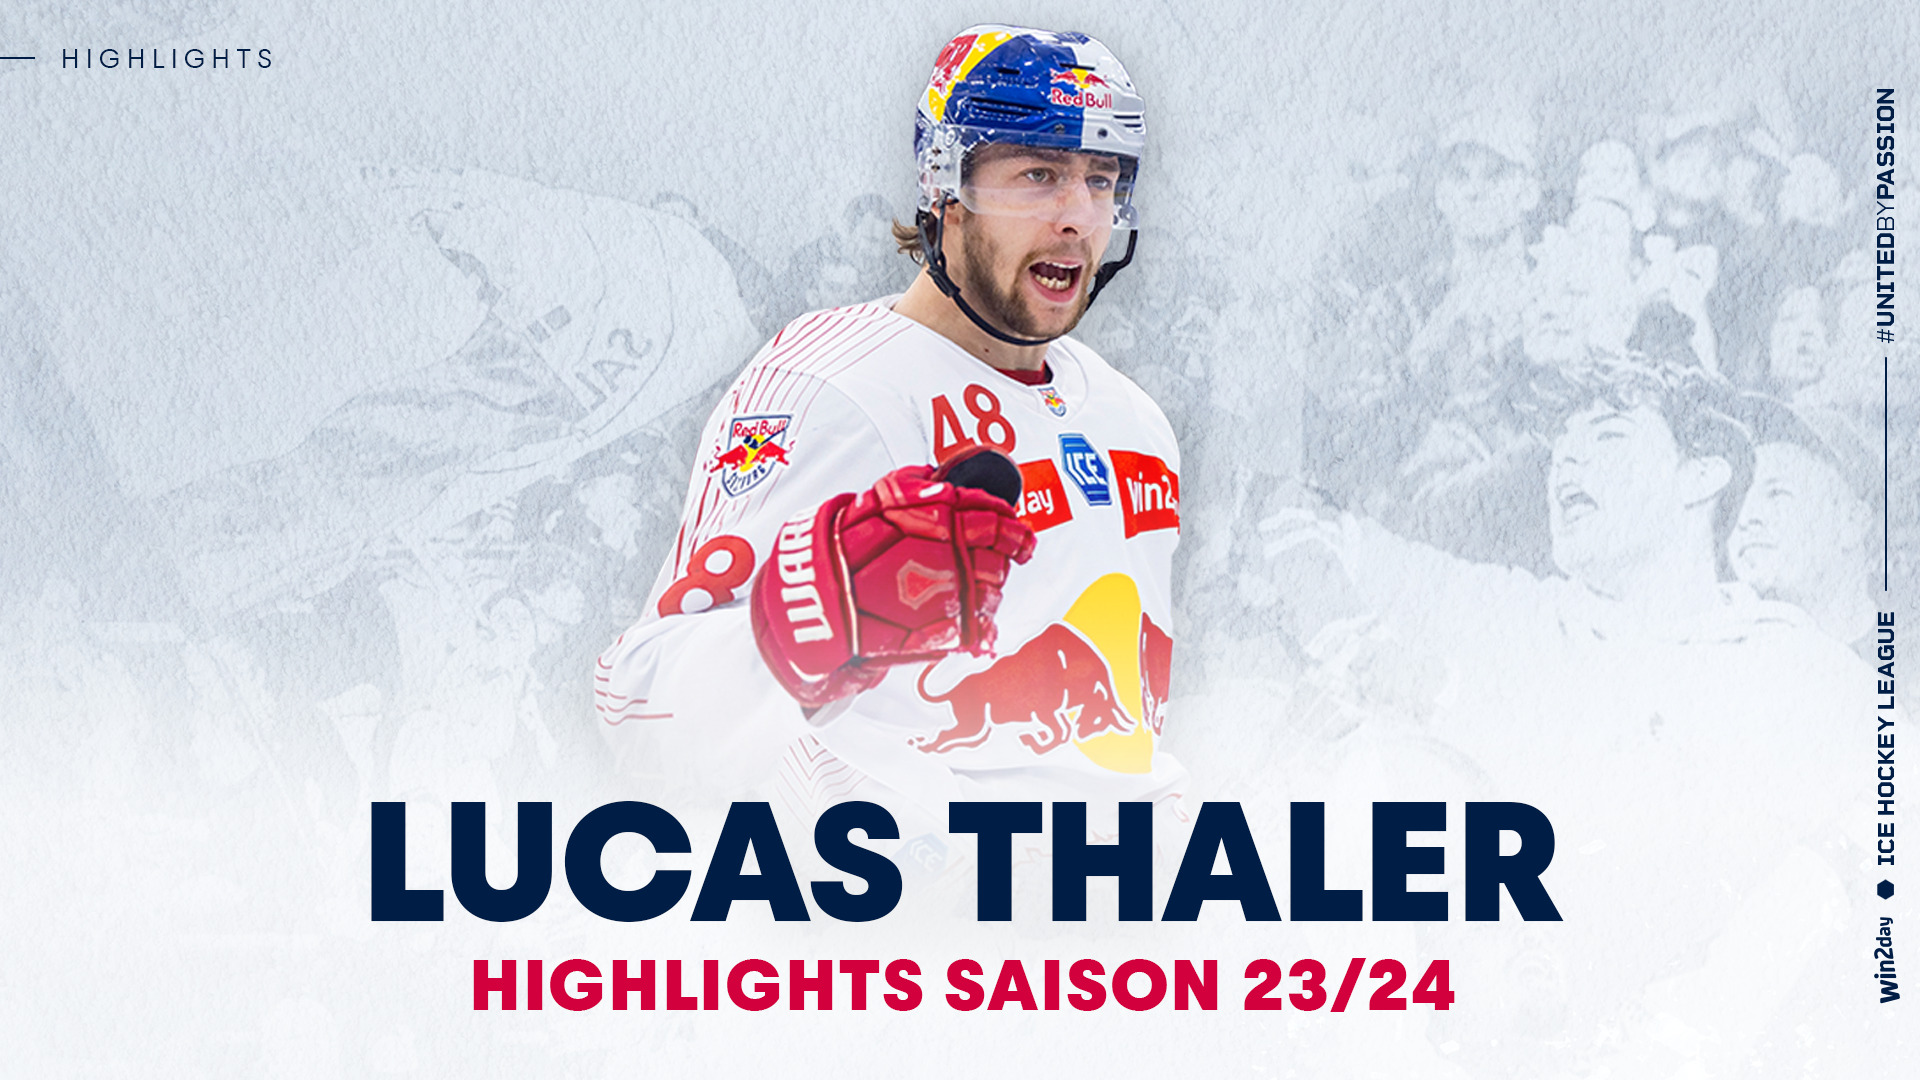 Lucas Thaler: Die Highlights aus der Saison 23/24